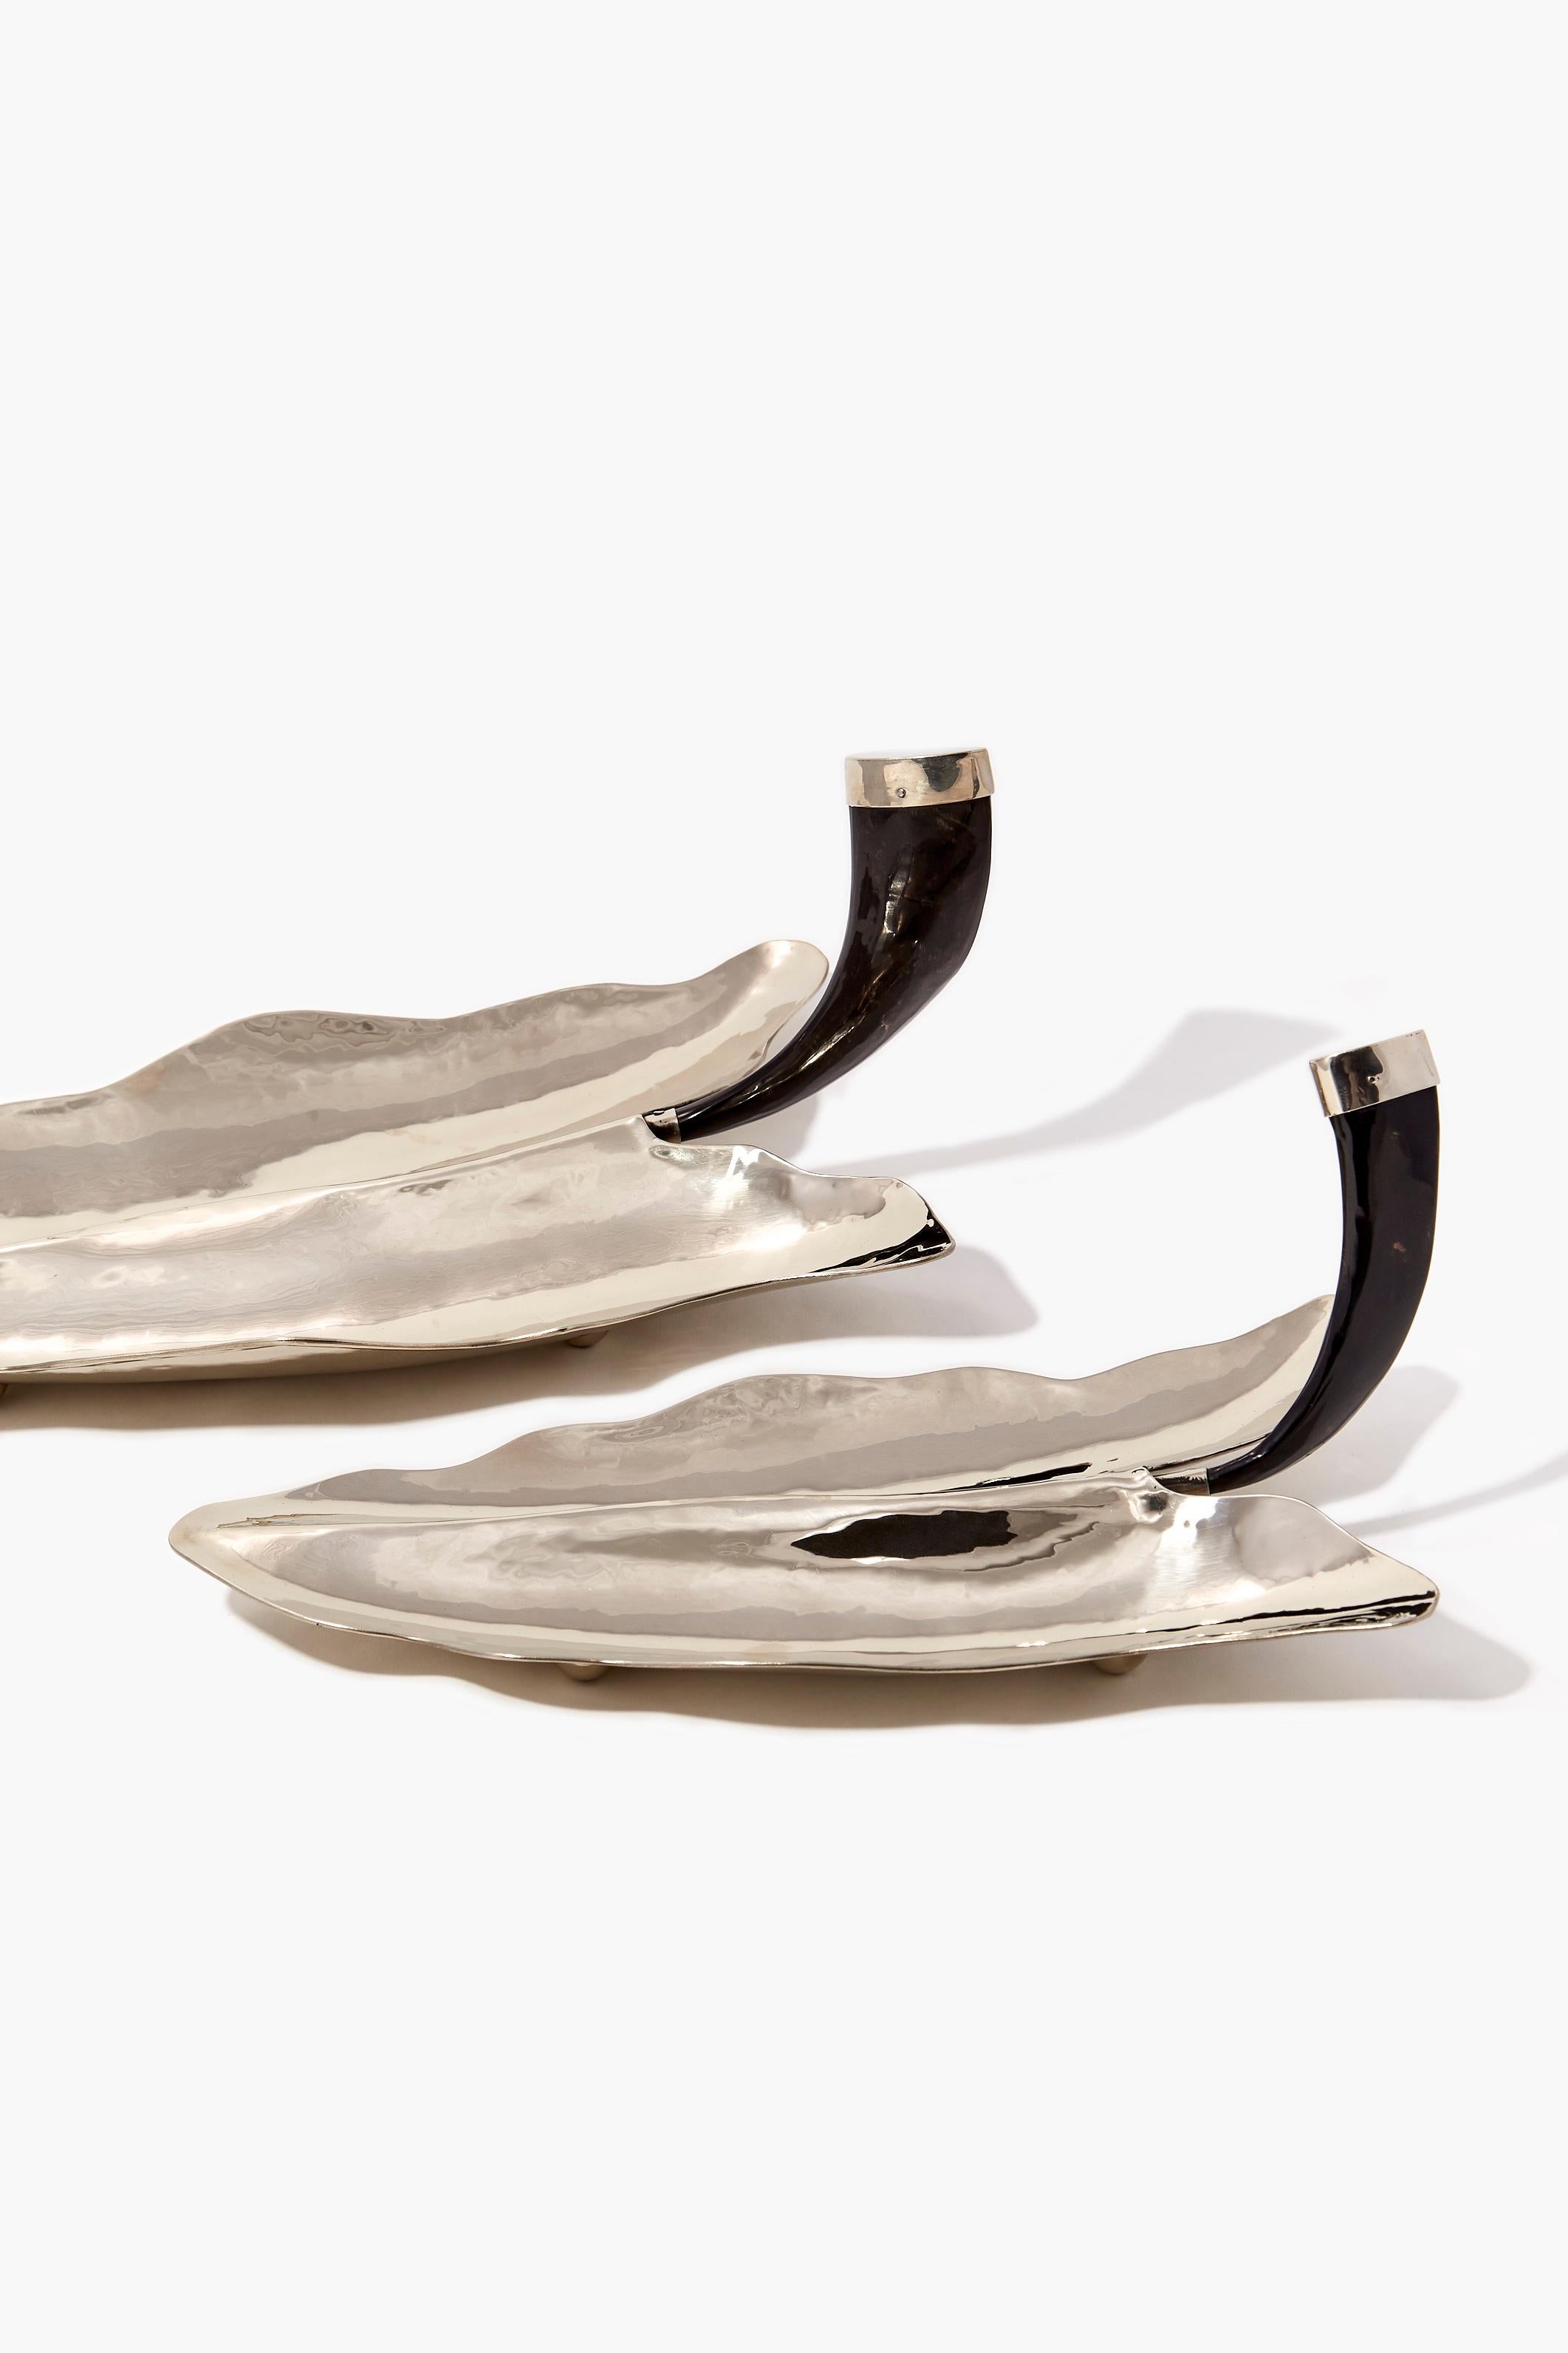 Argentine CALA Leaf Set, Small and Medium Tray, Horn & Alpaca Silver For Sale